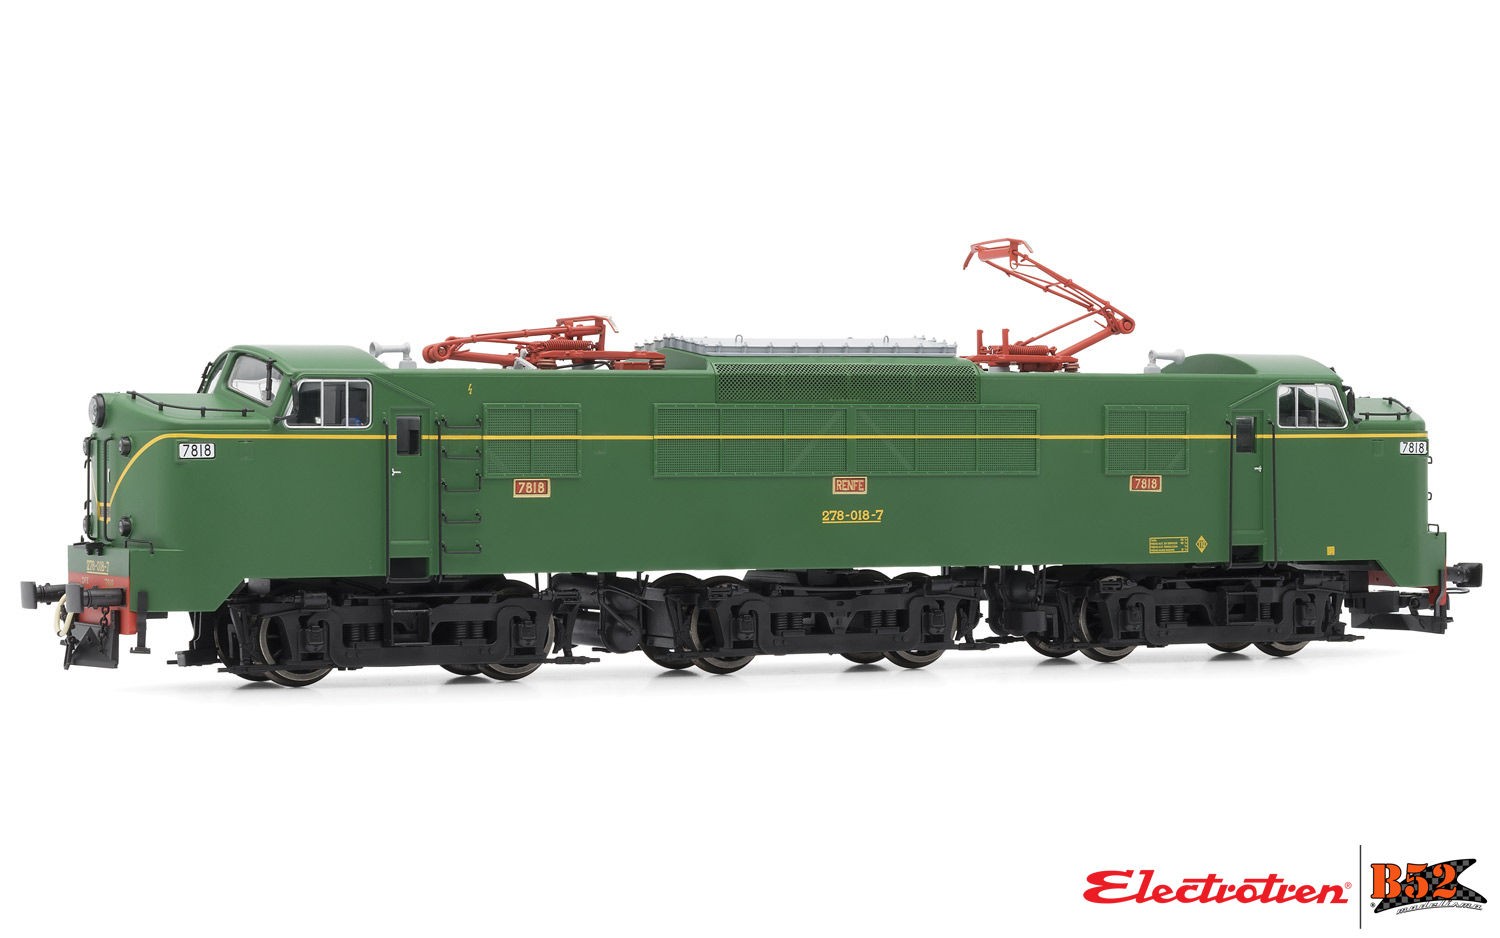 Electrotren HO - Locomotiva Elétrica 278-018-7, RENFE: E3033